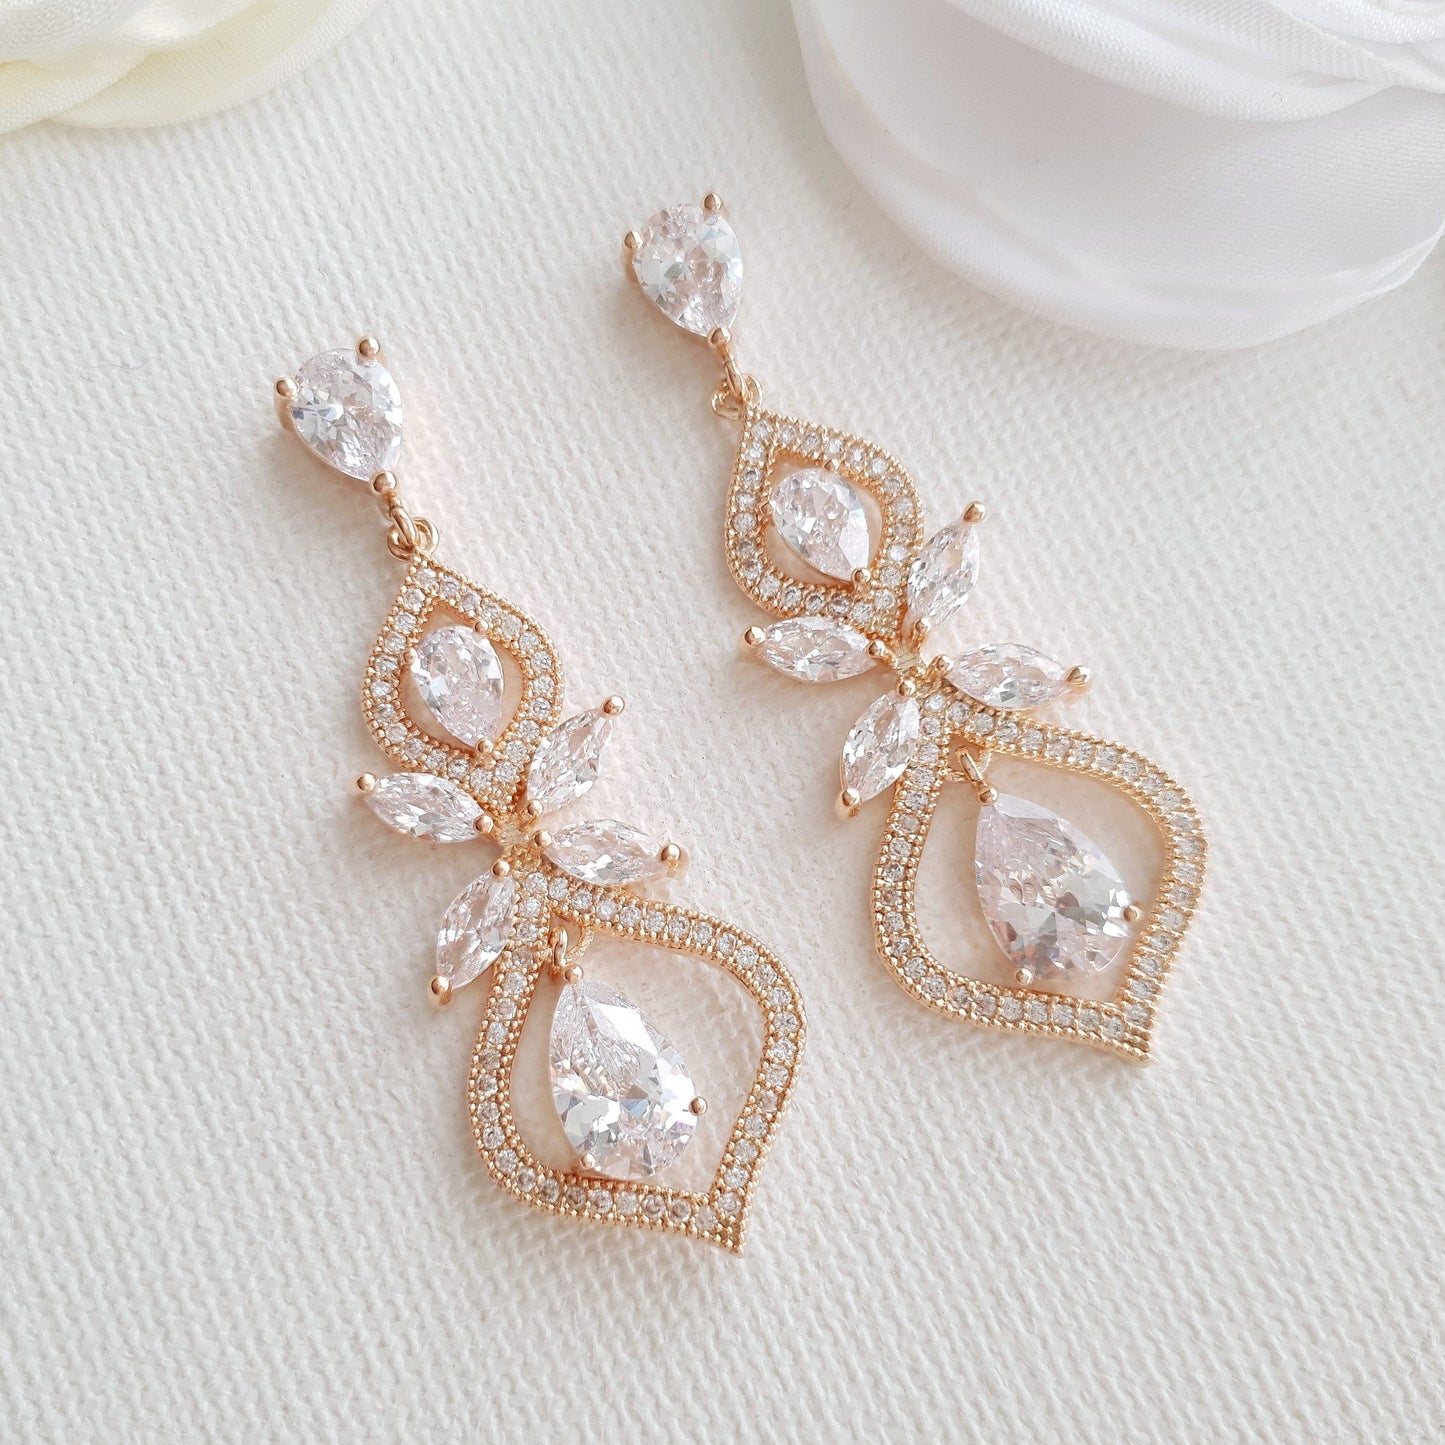 rose gold crystal earrings for weddings & brides